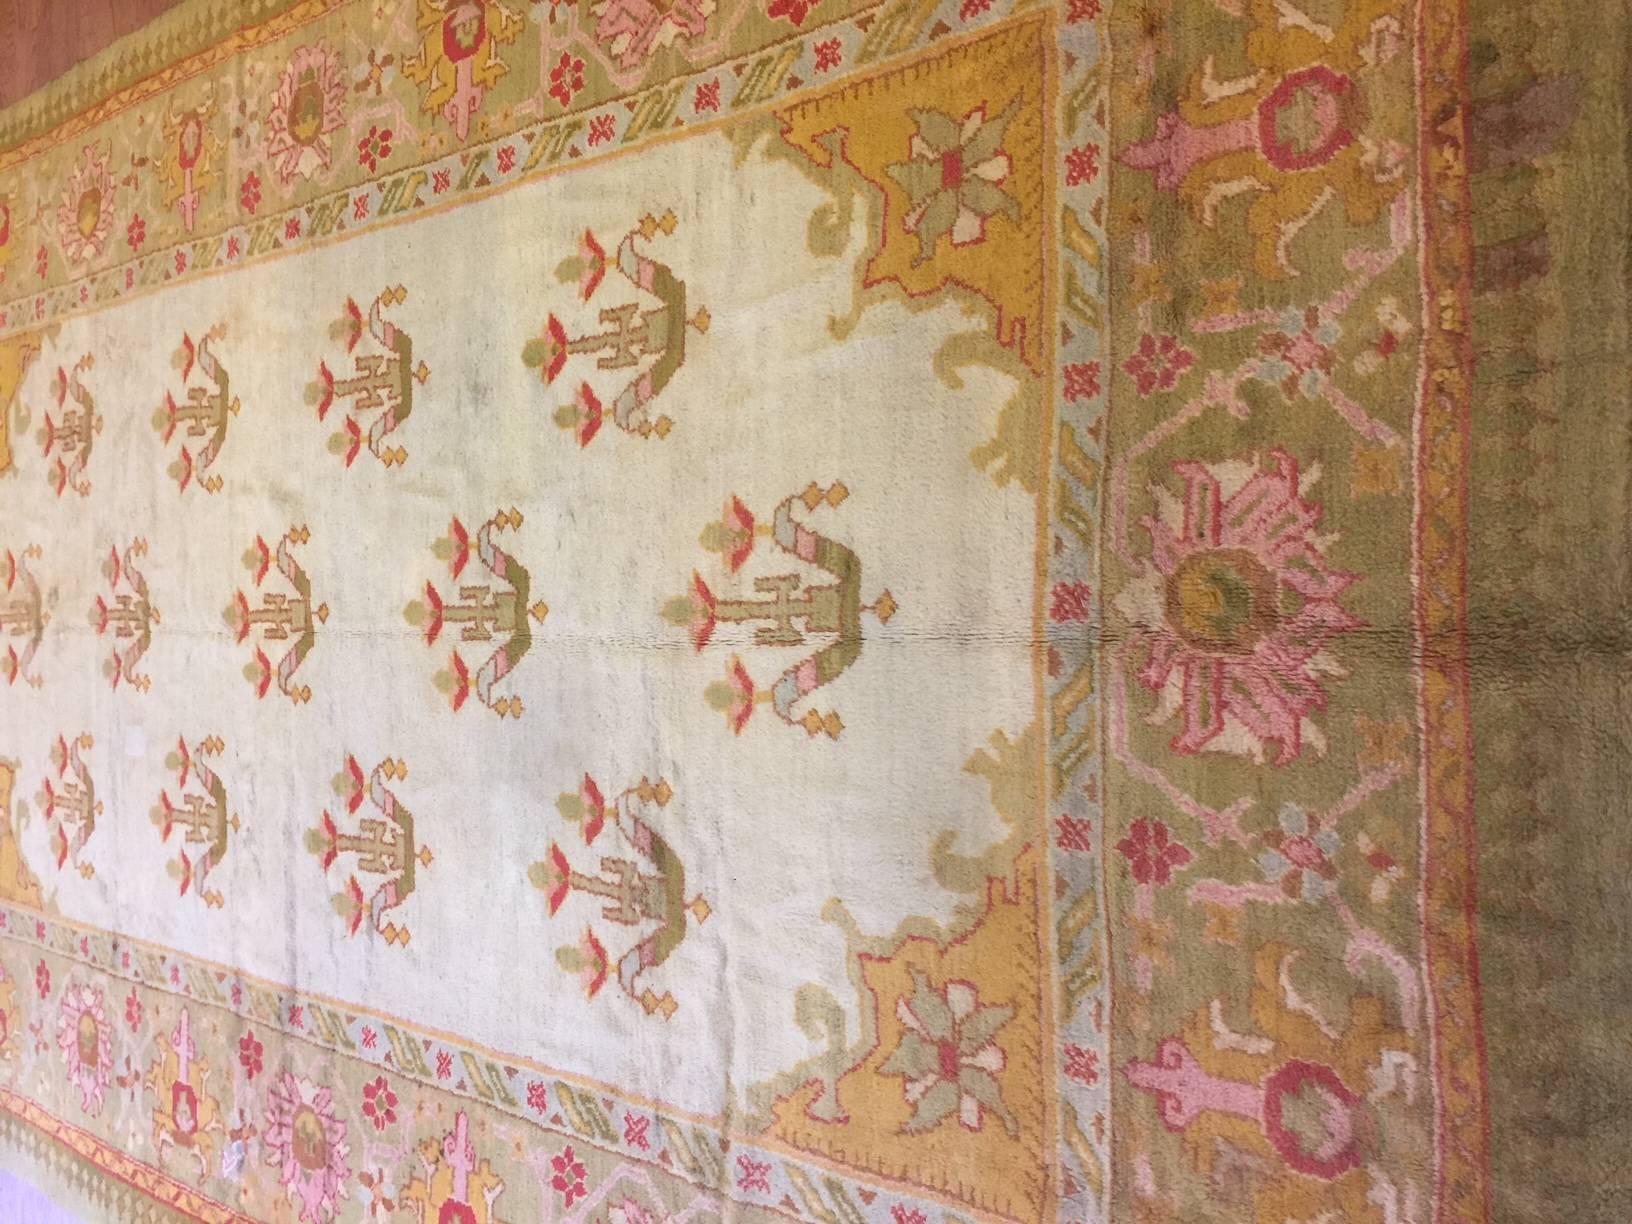 Antique Turkish Oushak rug. Contact dealer.